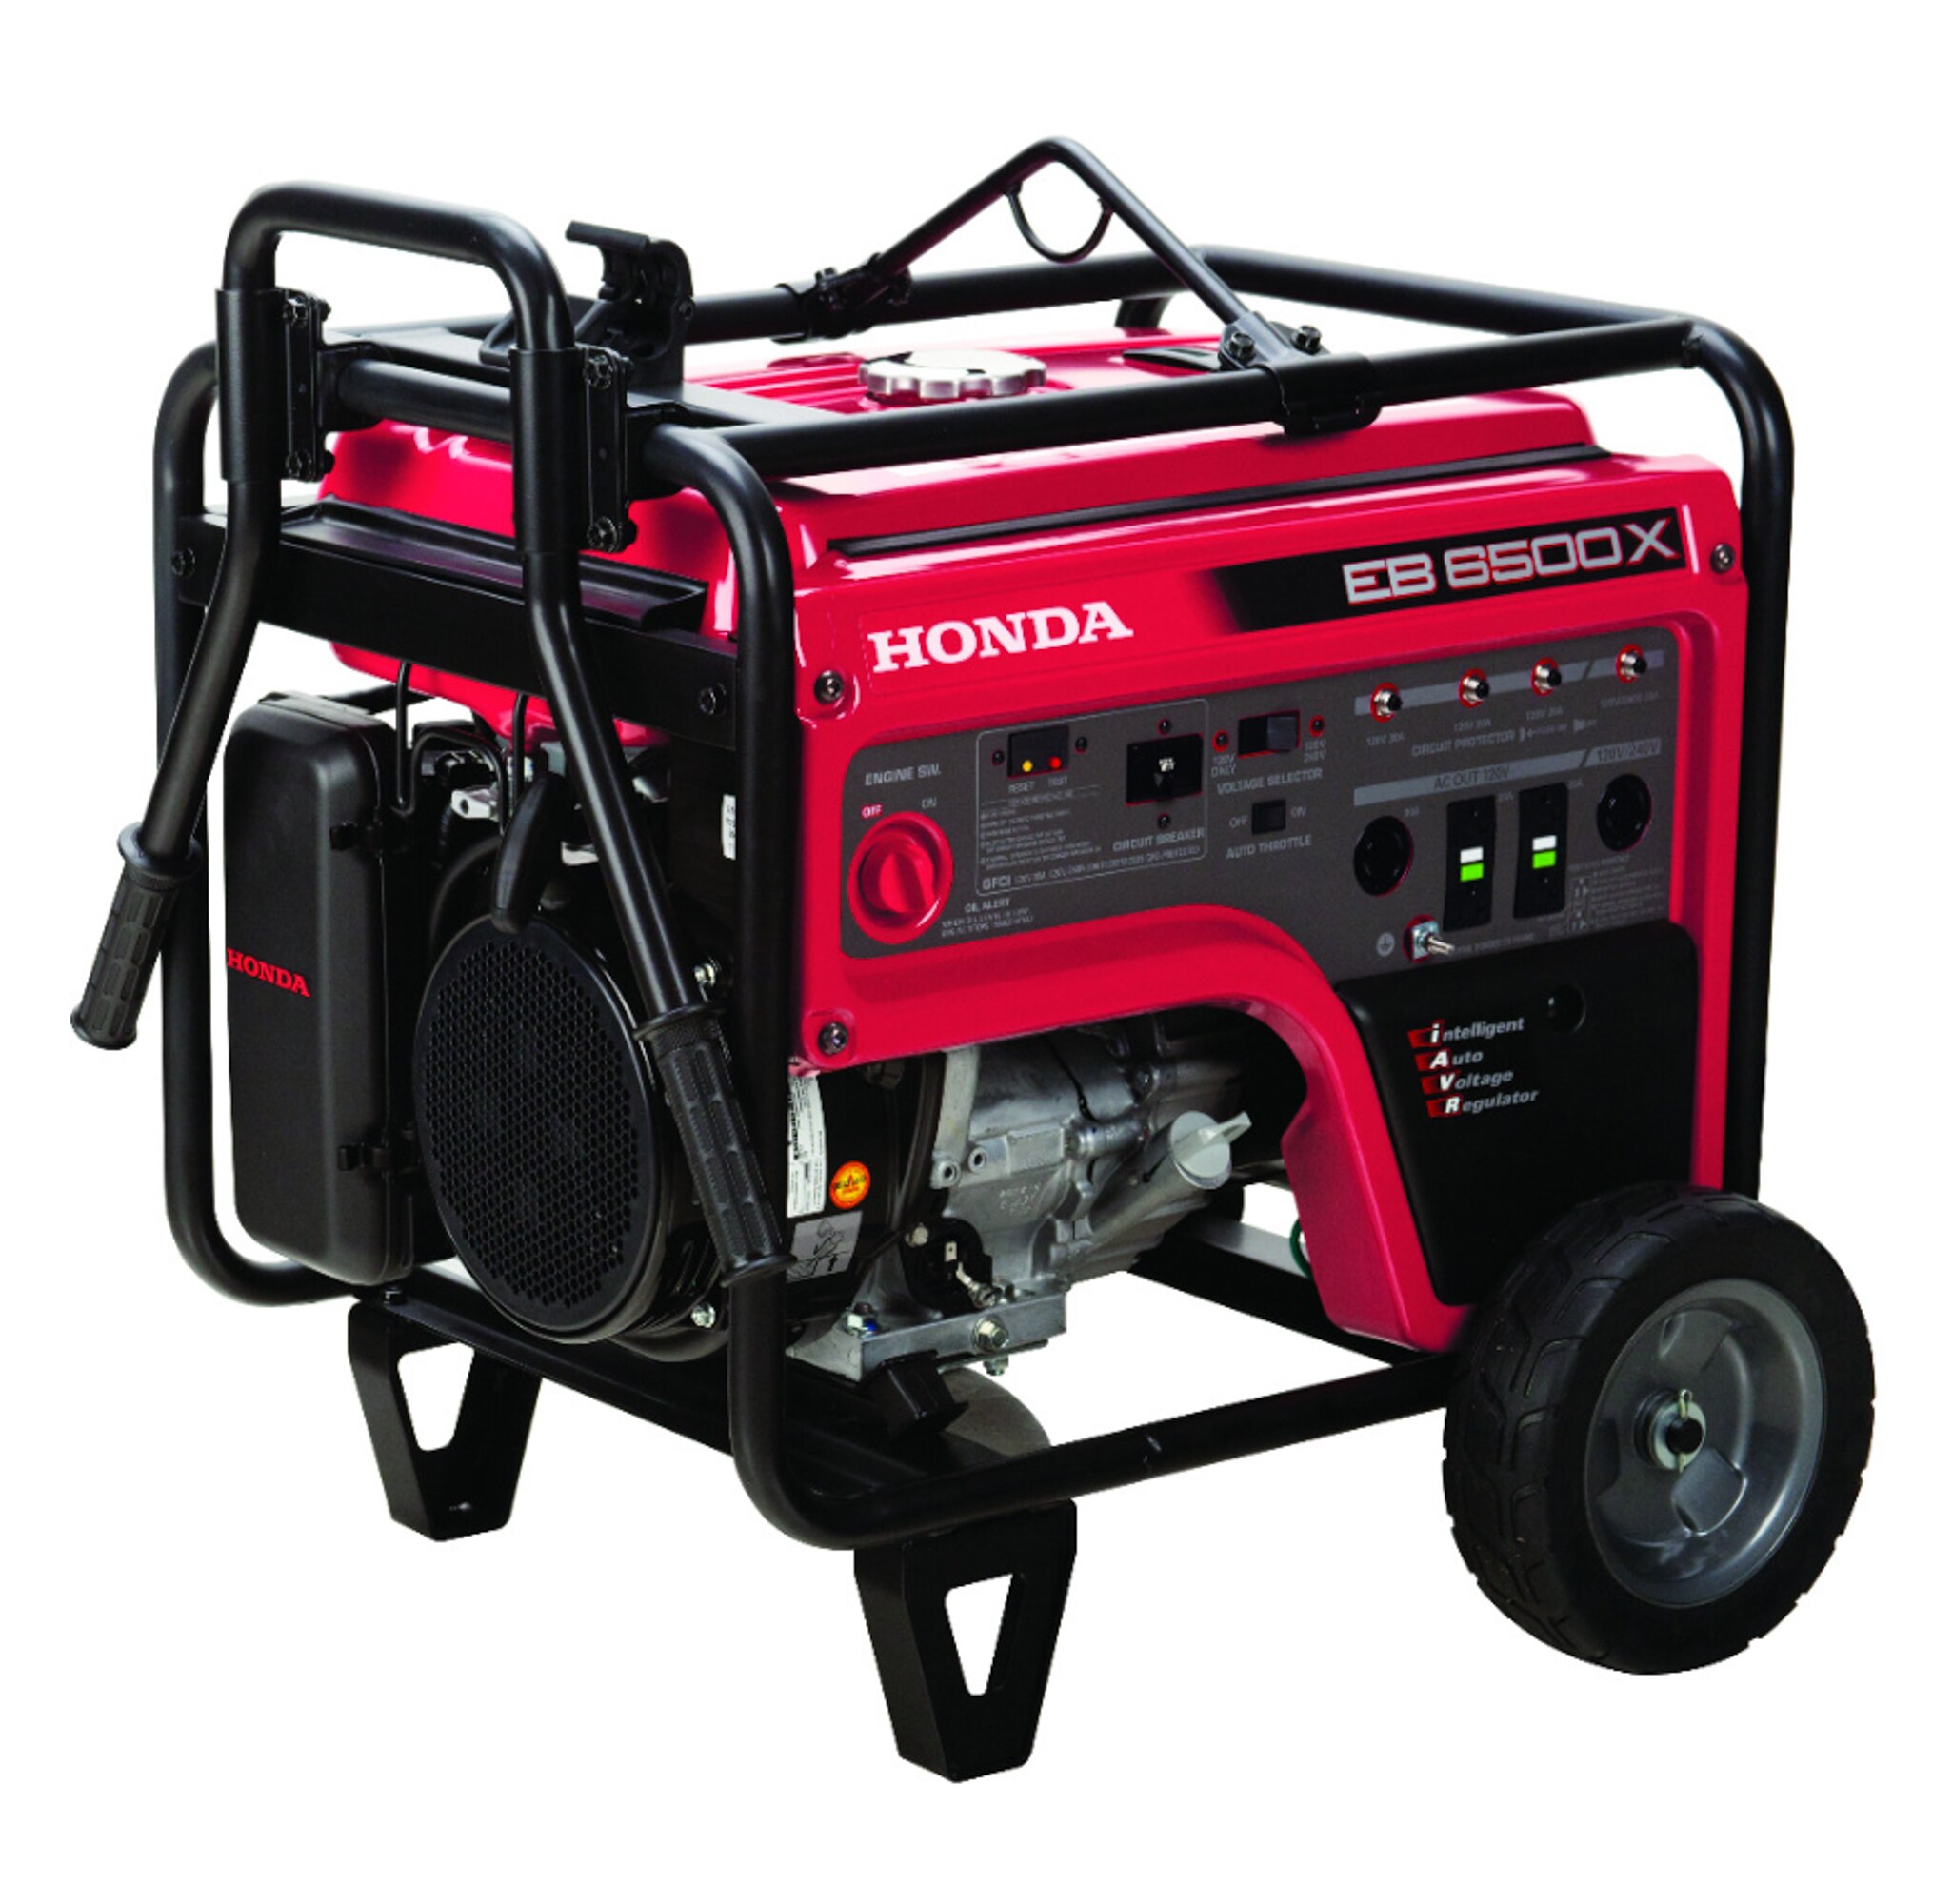 Benefits Of Honda 5500 Generator